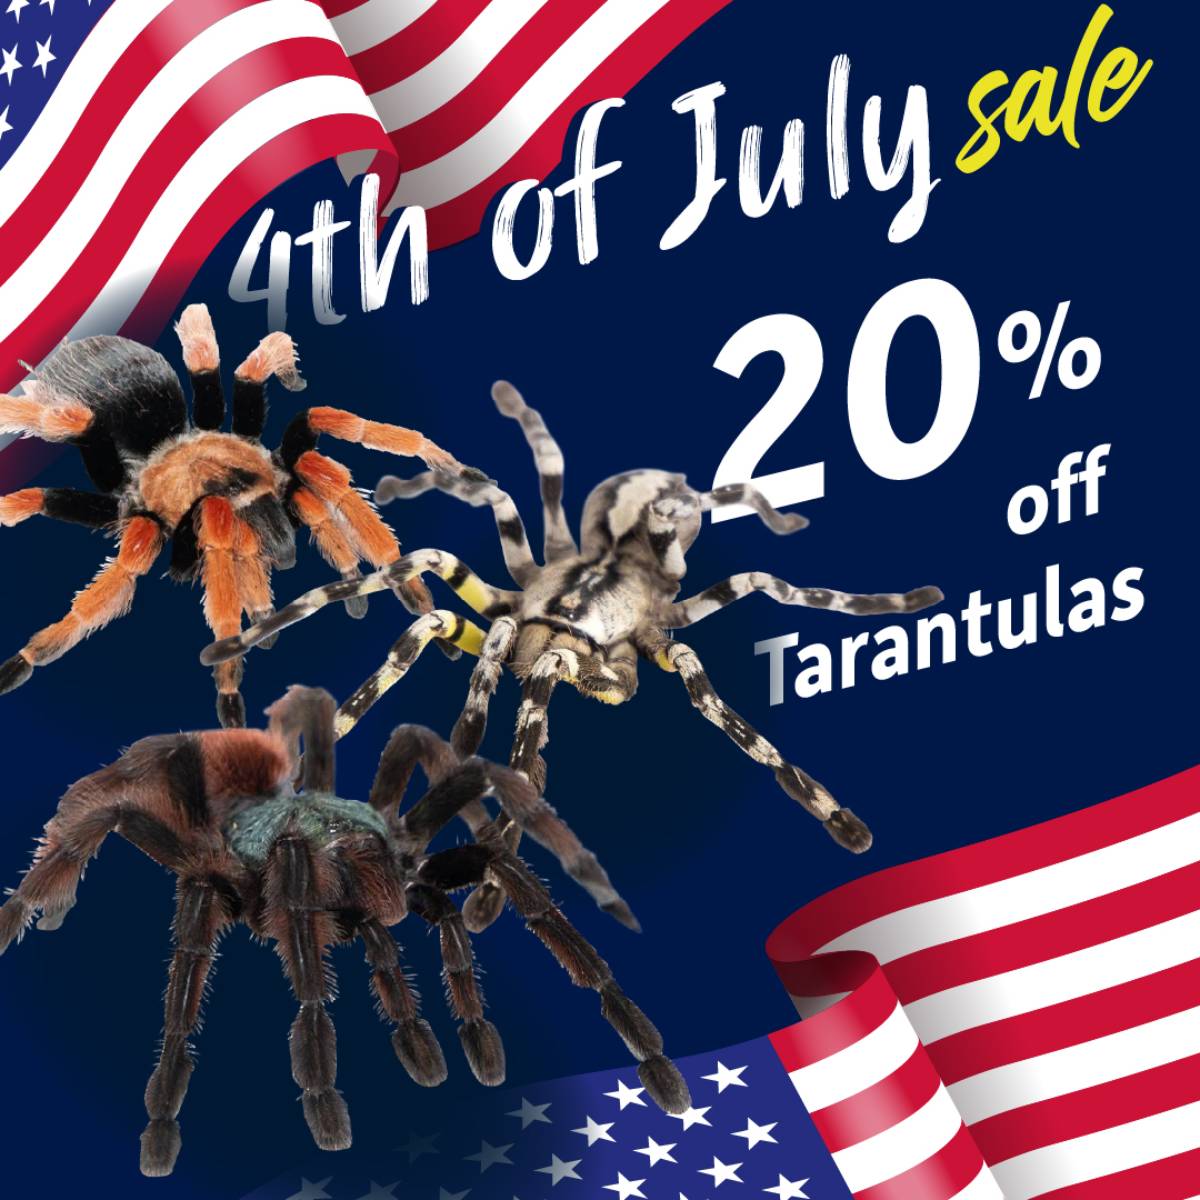 Save 20% on select tarantulas.